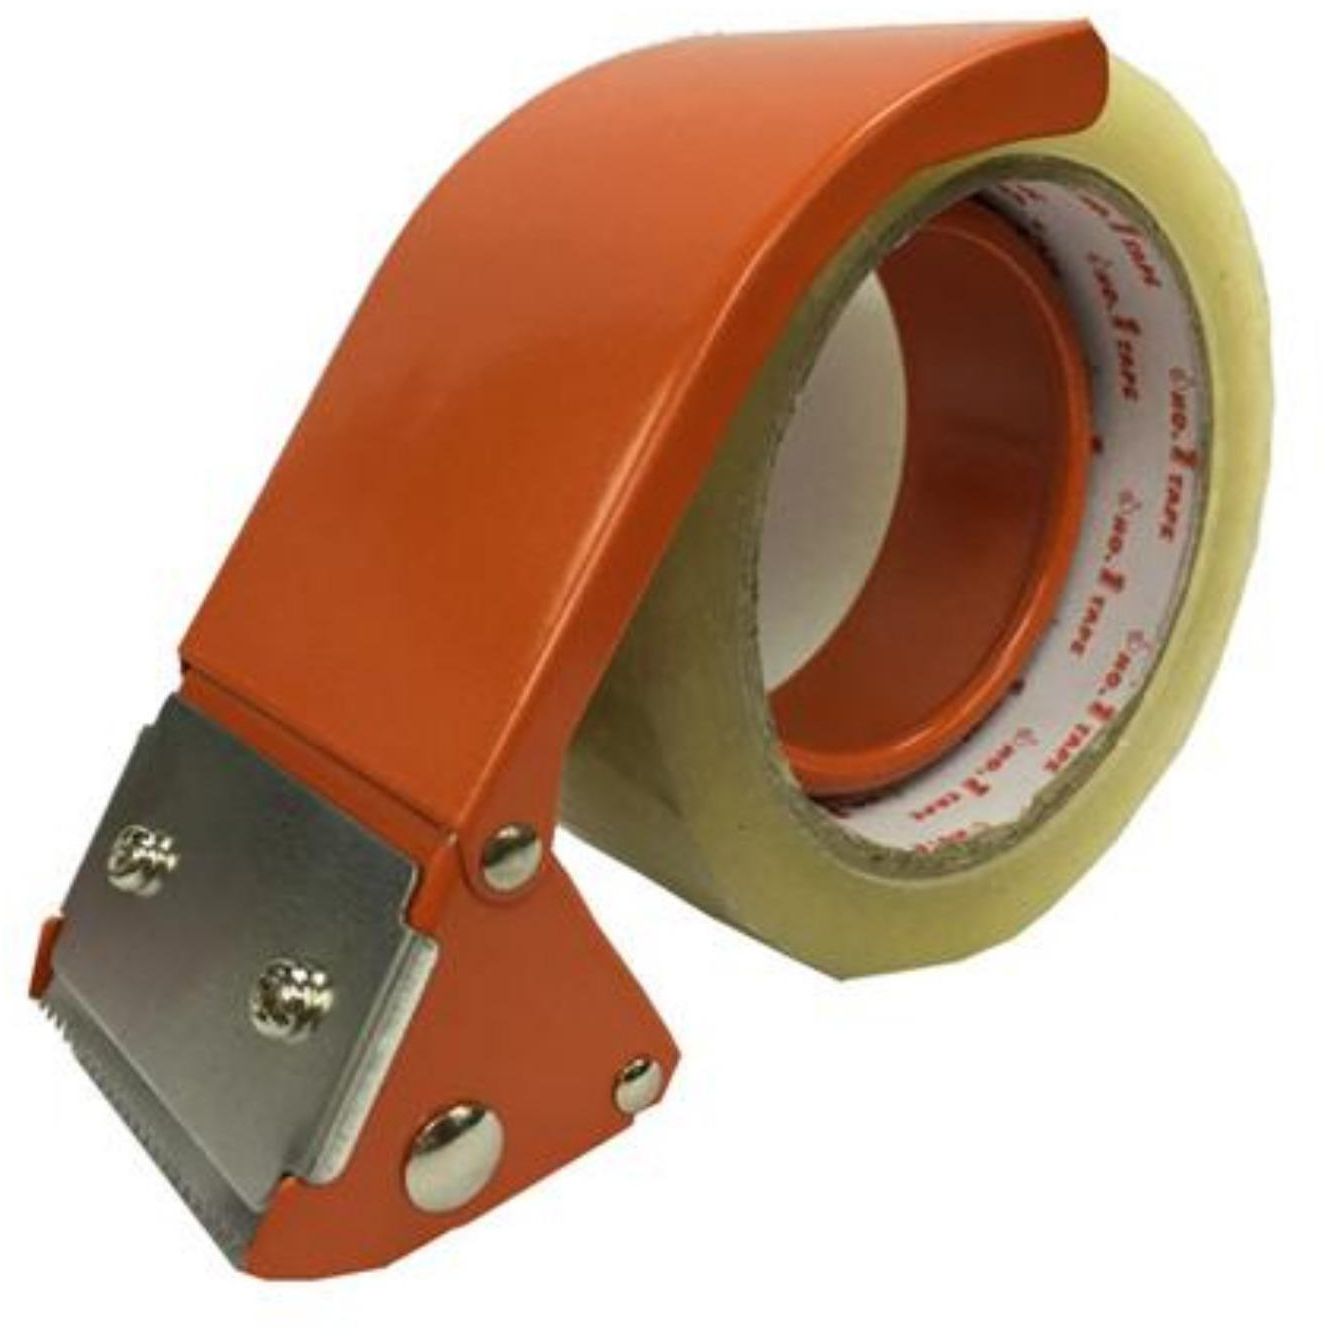 Metal Tape Cutter (Packaging Tape Dispenser) + 2 inch OPP tape X 1 pc